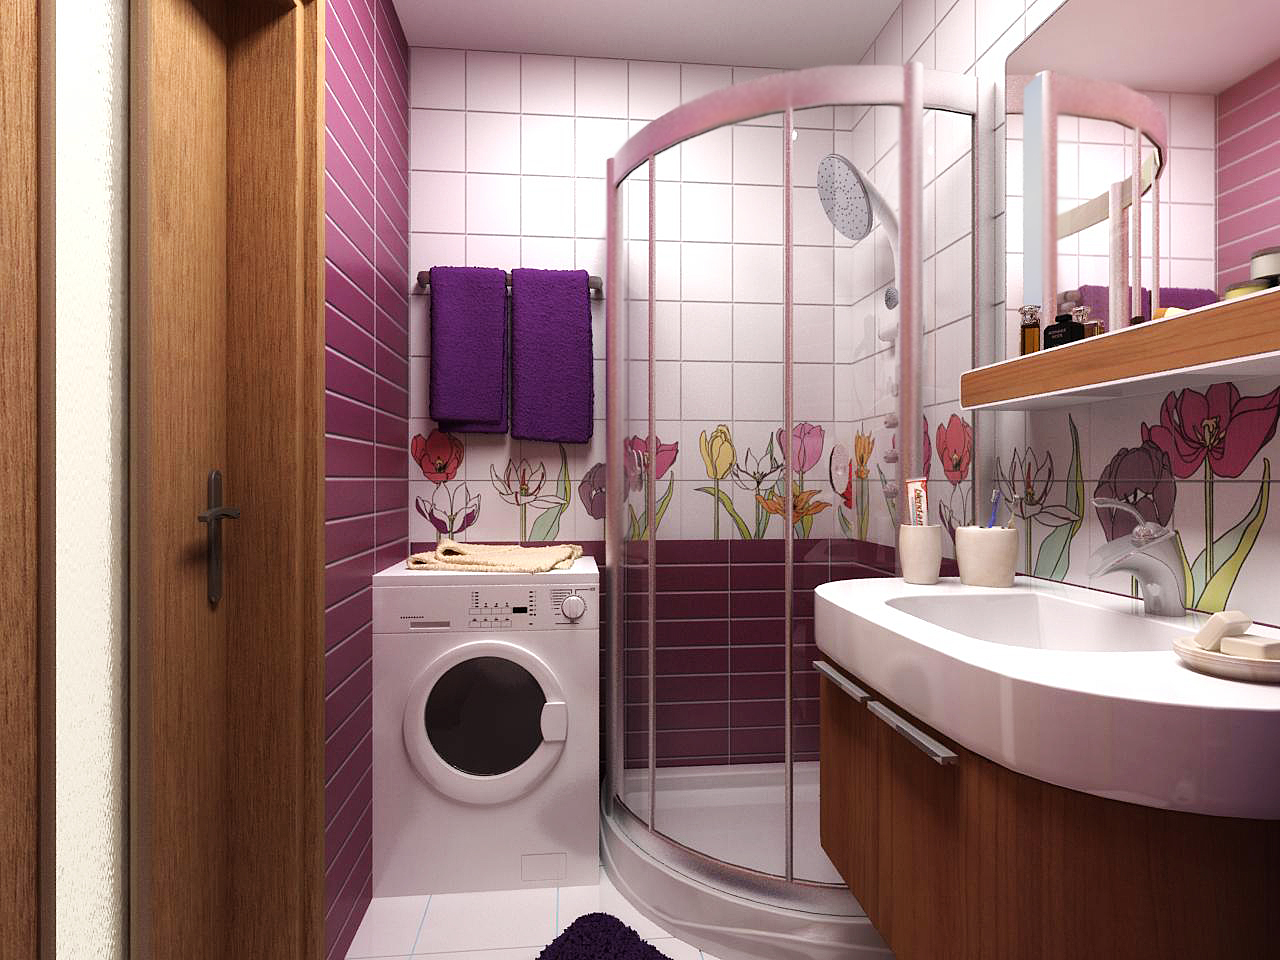 яркий дизайн ванной комнаты 3 кв м